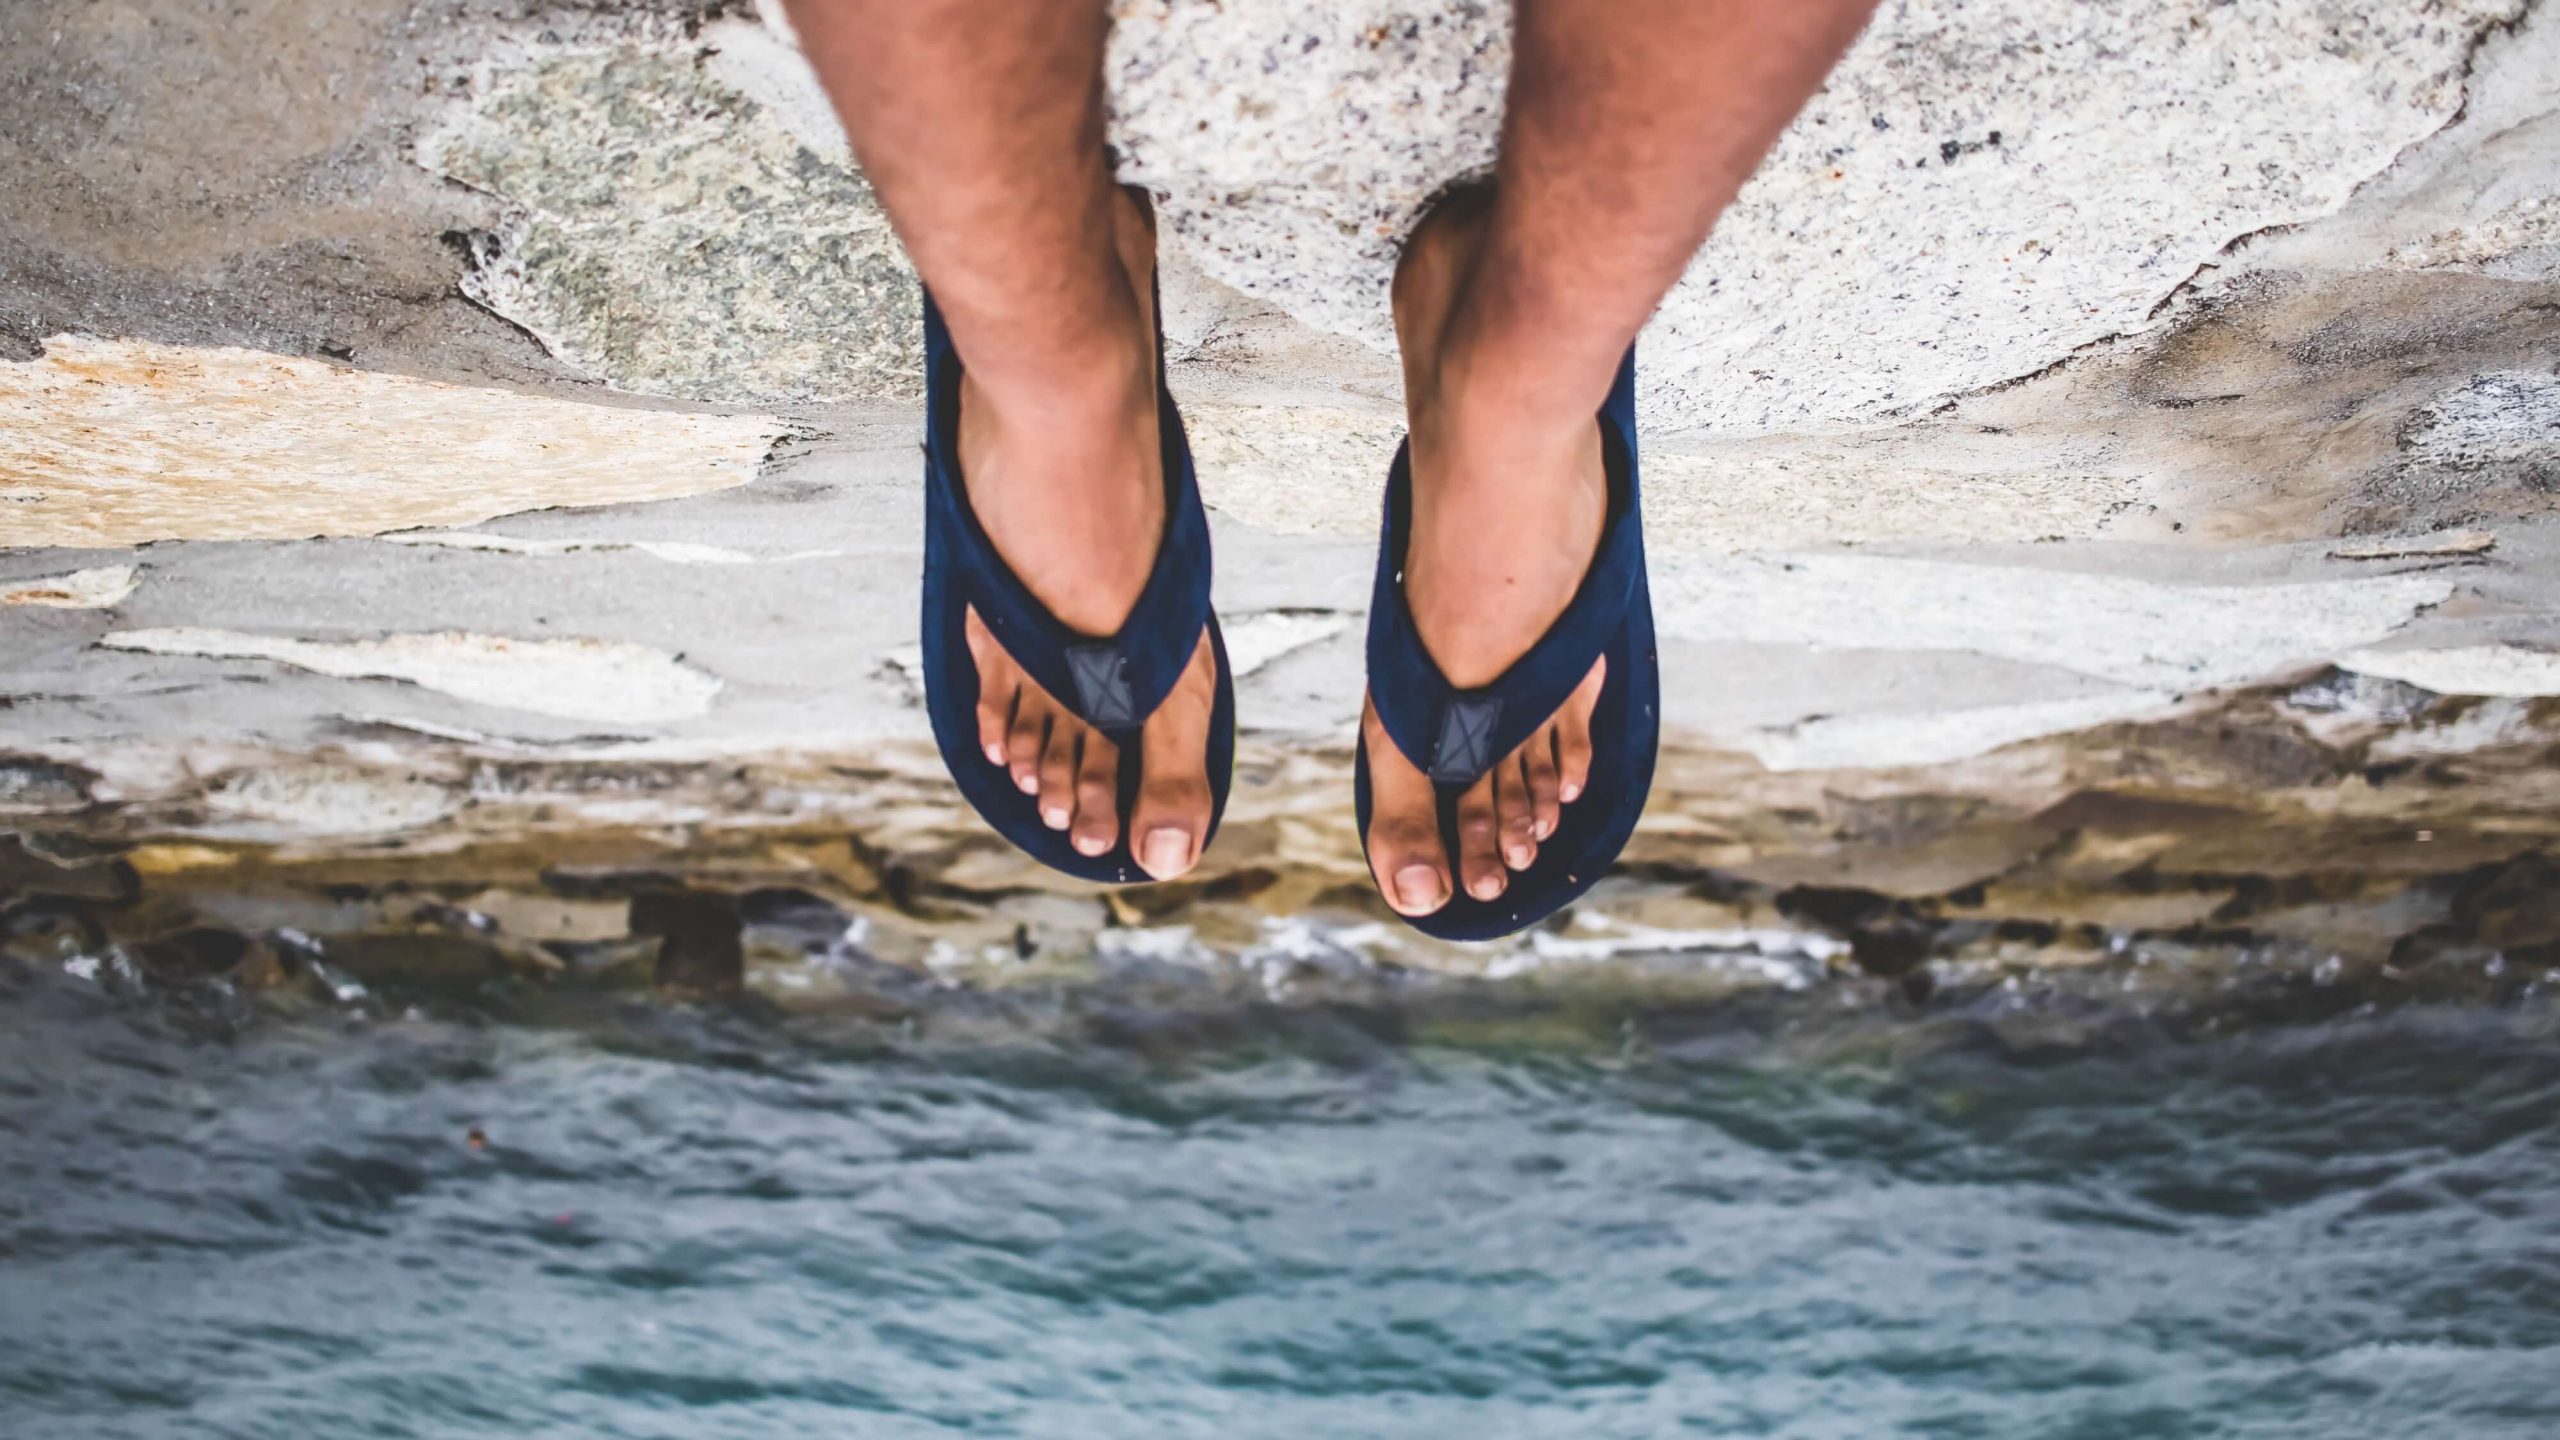 Summer Sandals and Flip Flops